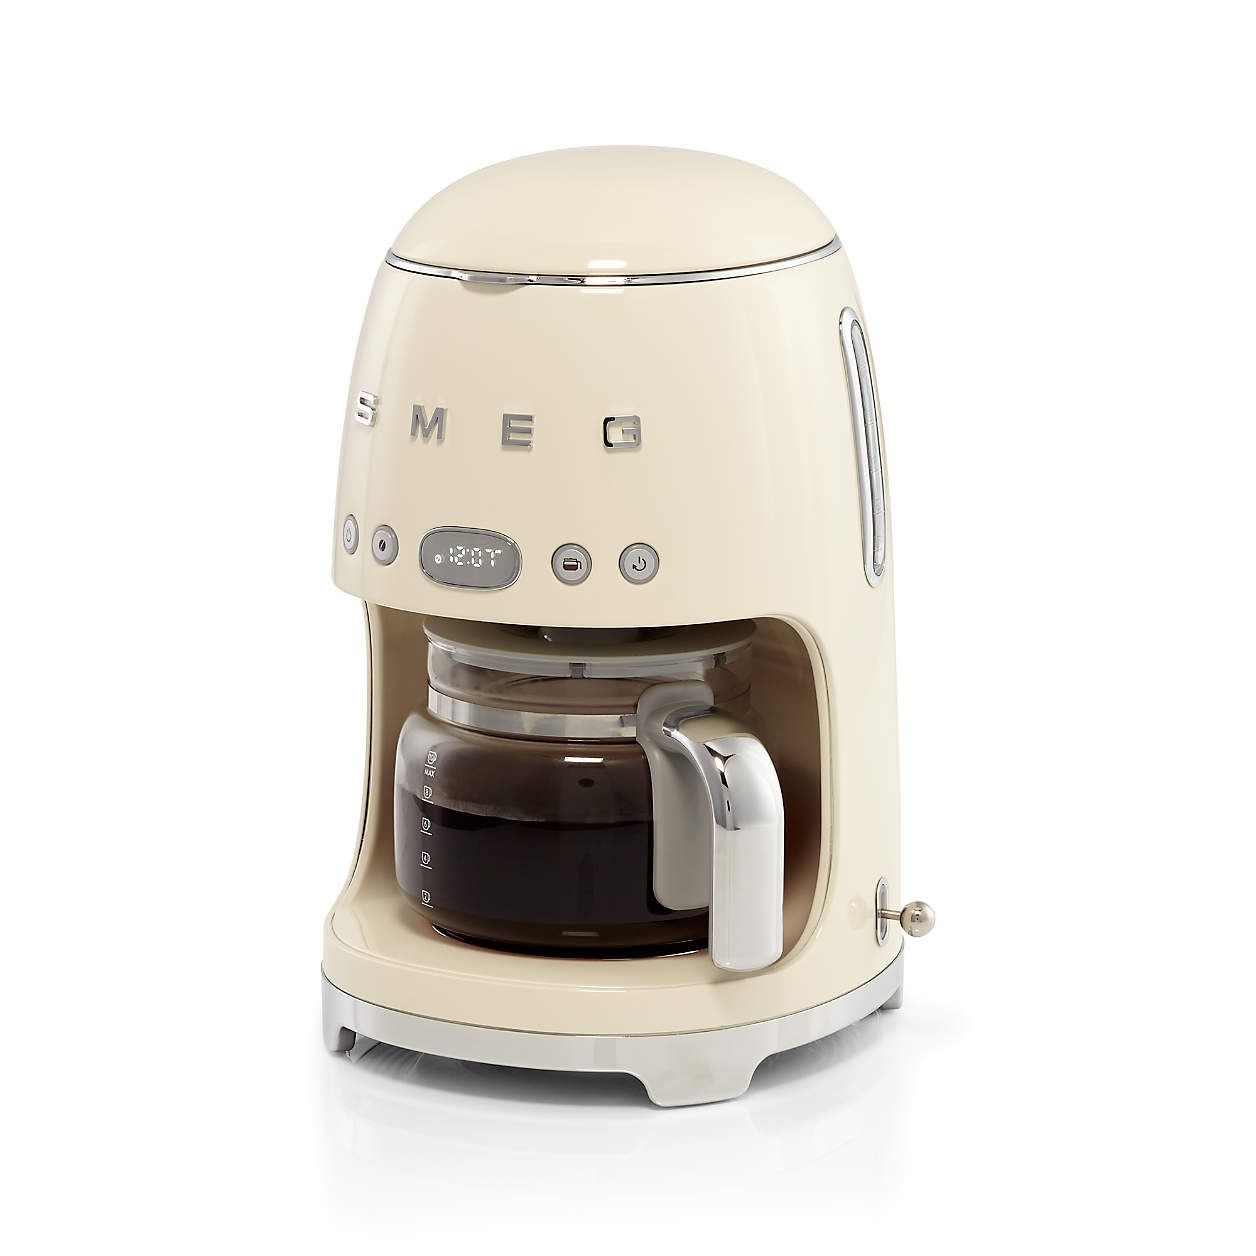 SMEG Cream Drip Coffee Maker + Reviews | Crate and Barrel | Crate & Barrel